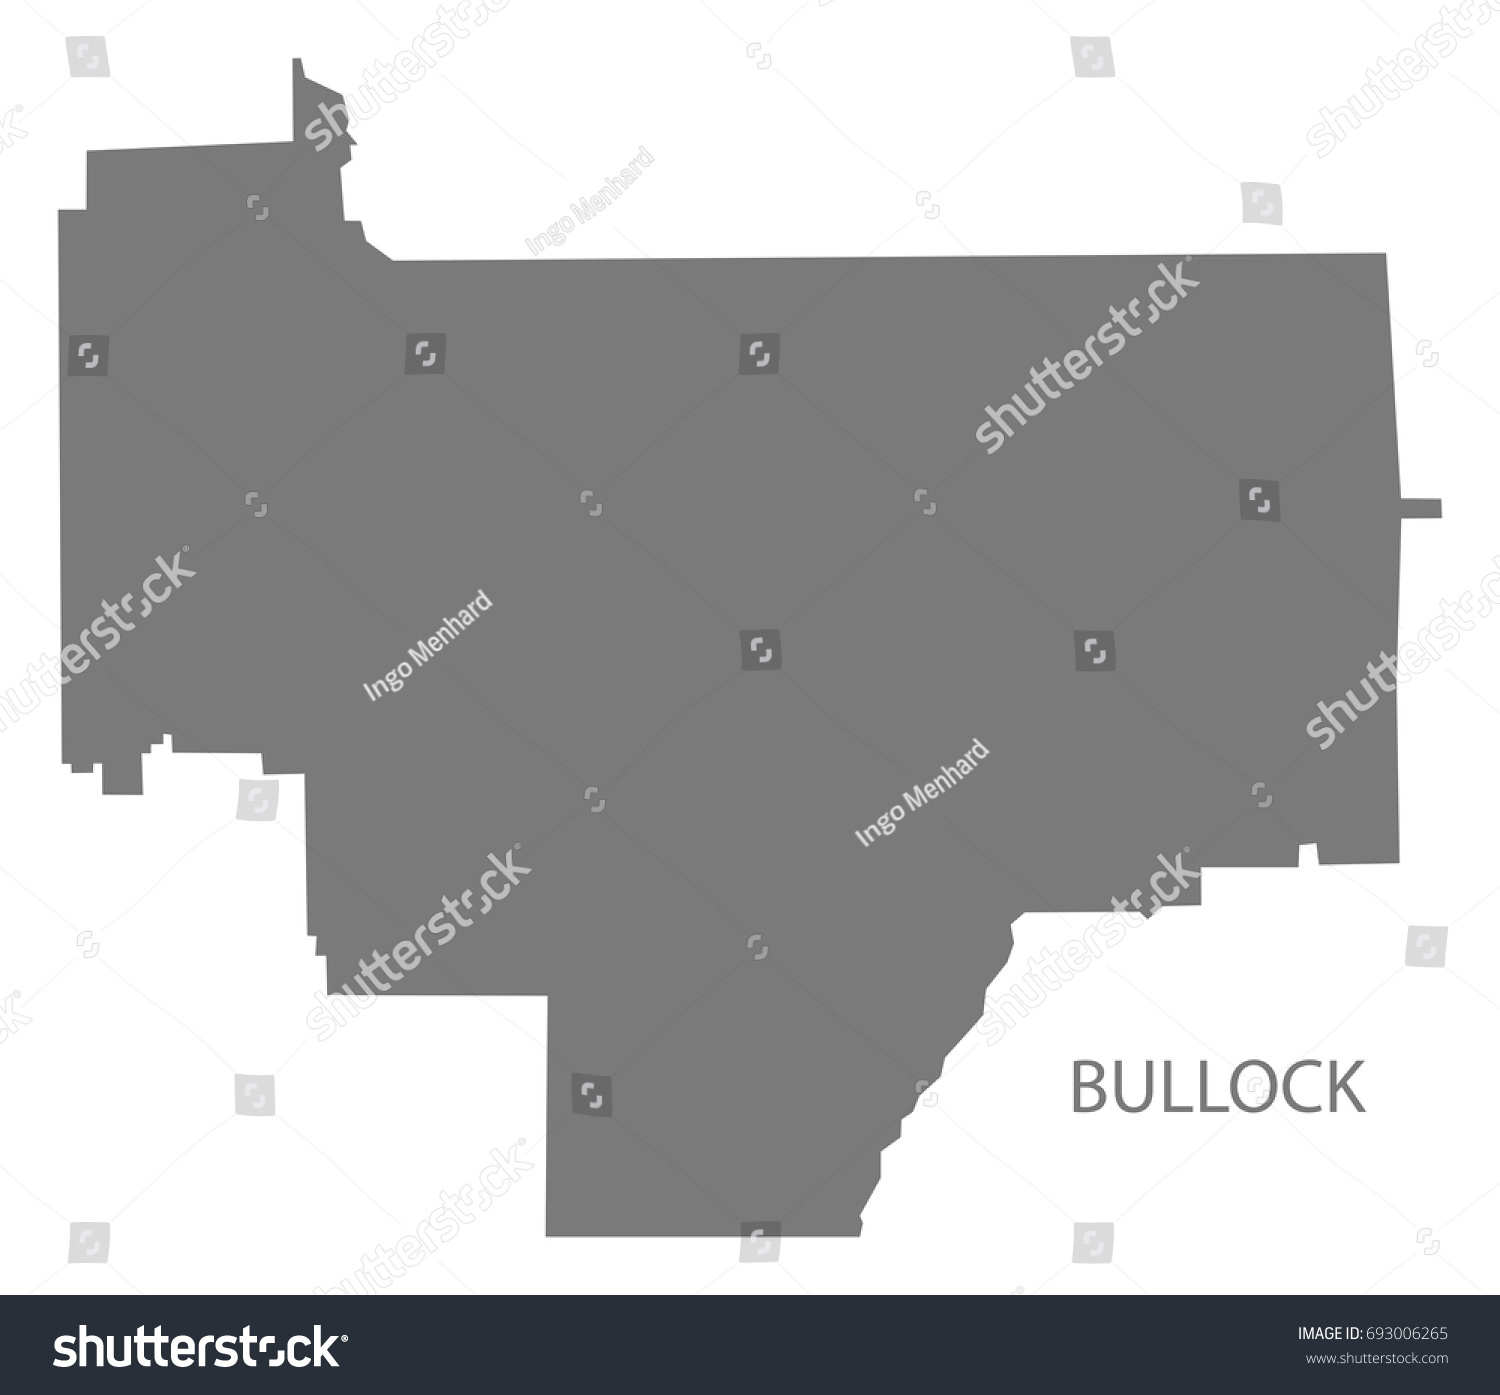 Bullock County Map Of Alabama Usa Grey Royalty Free Stock Vector 693006265 3193